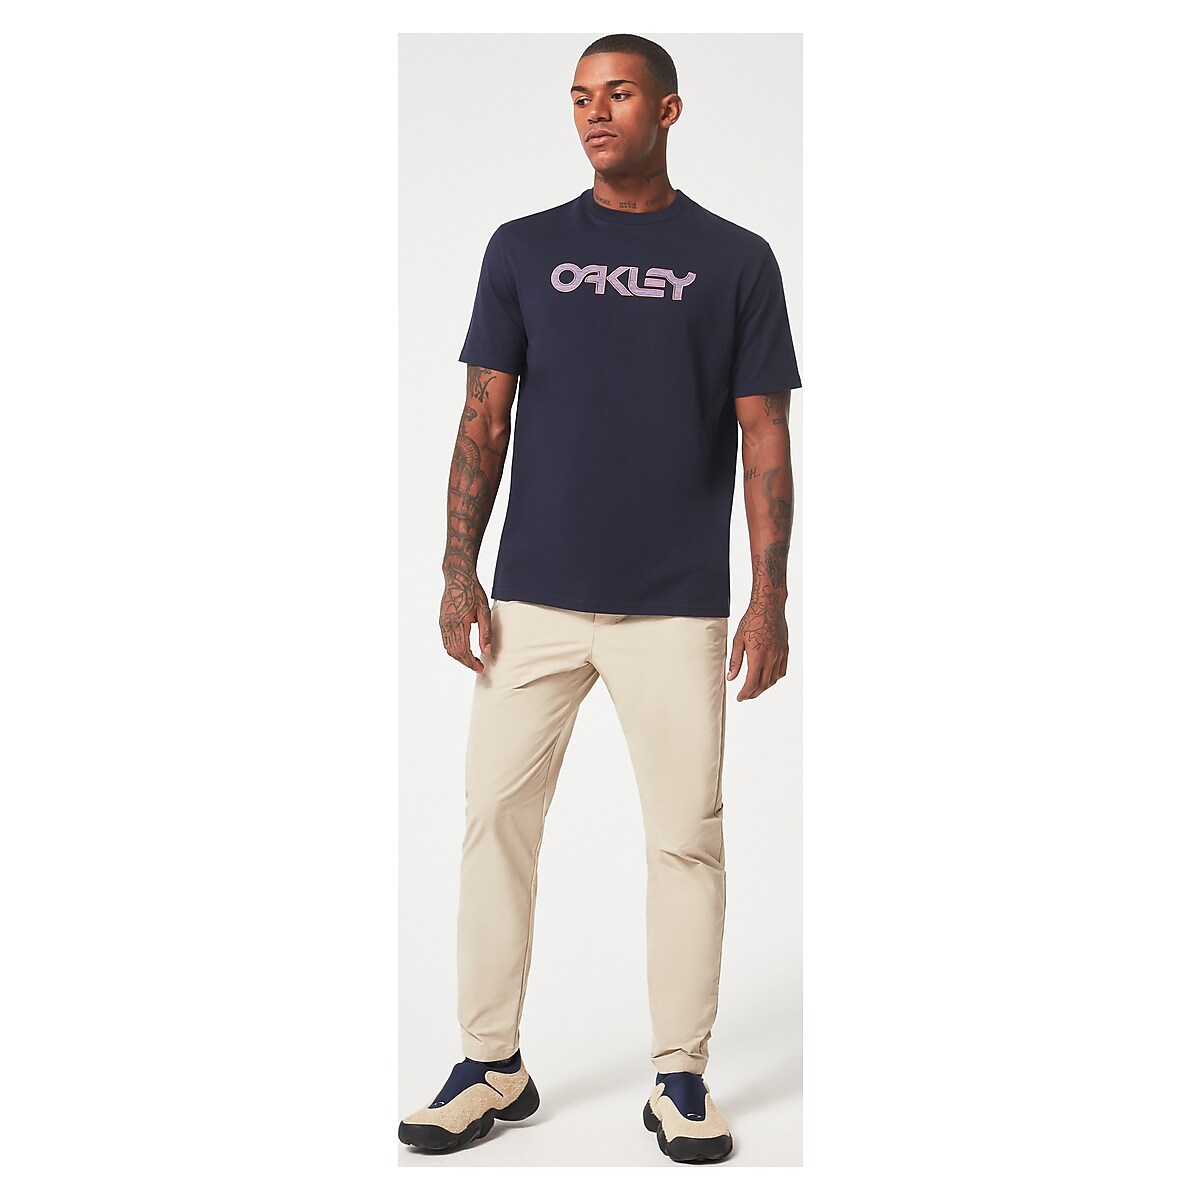 Oakley Men's Roam Commuter Pant, Rye, X-Small at  Men's Clothing store